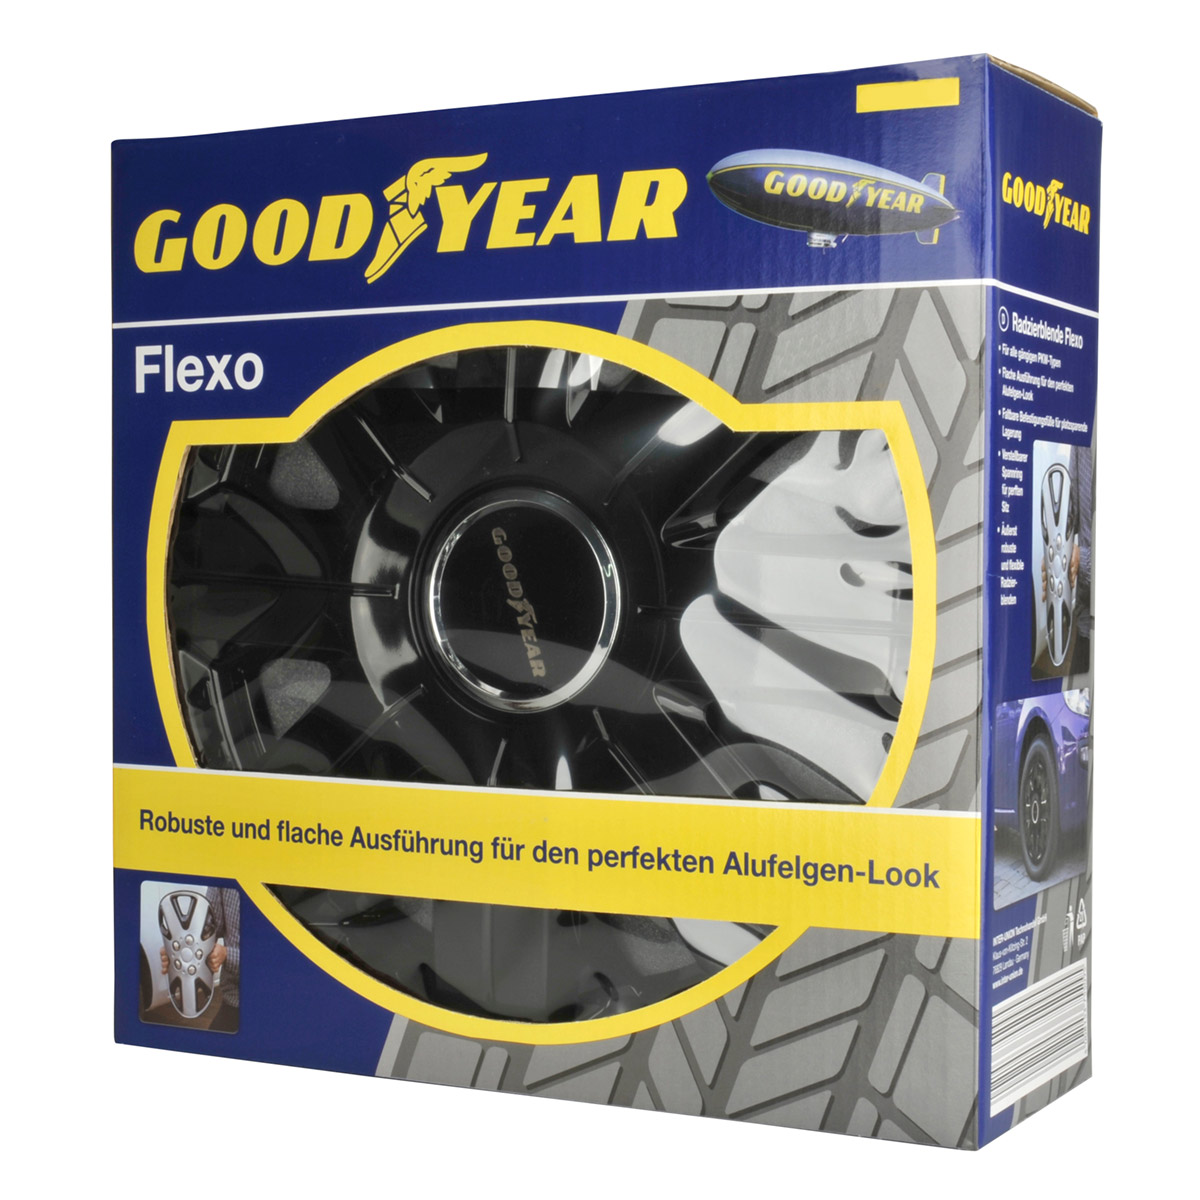 Goodyear Flexo 75513 Wheel Trims 13 Inches Set of 4 Silver